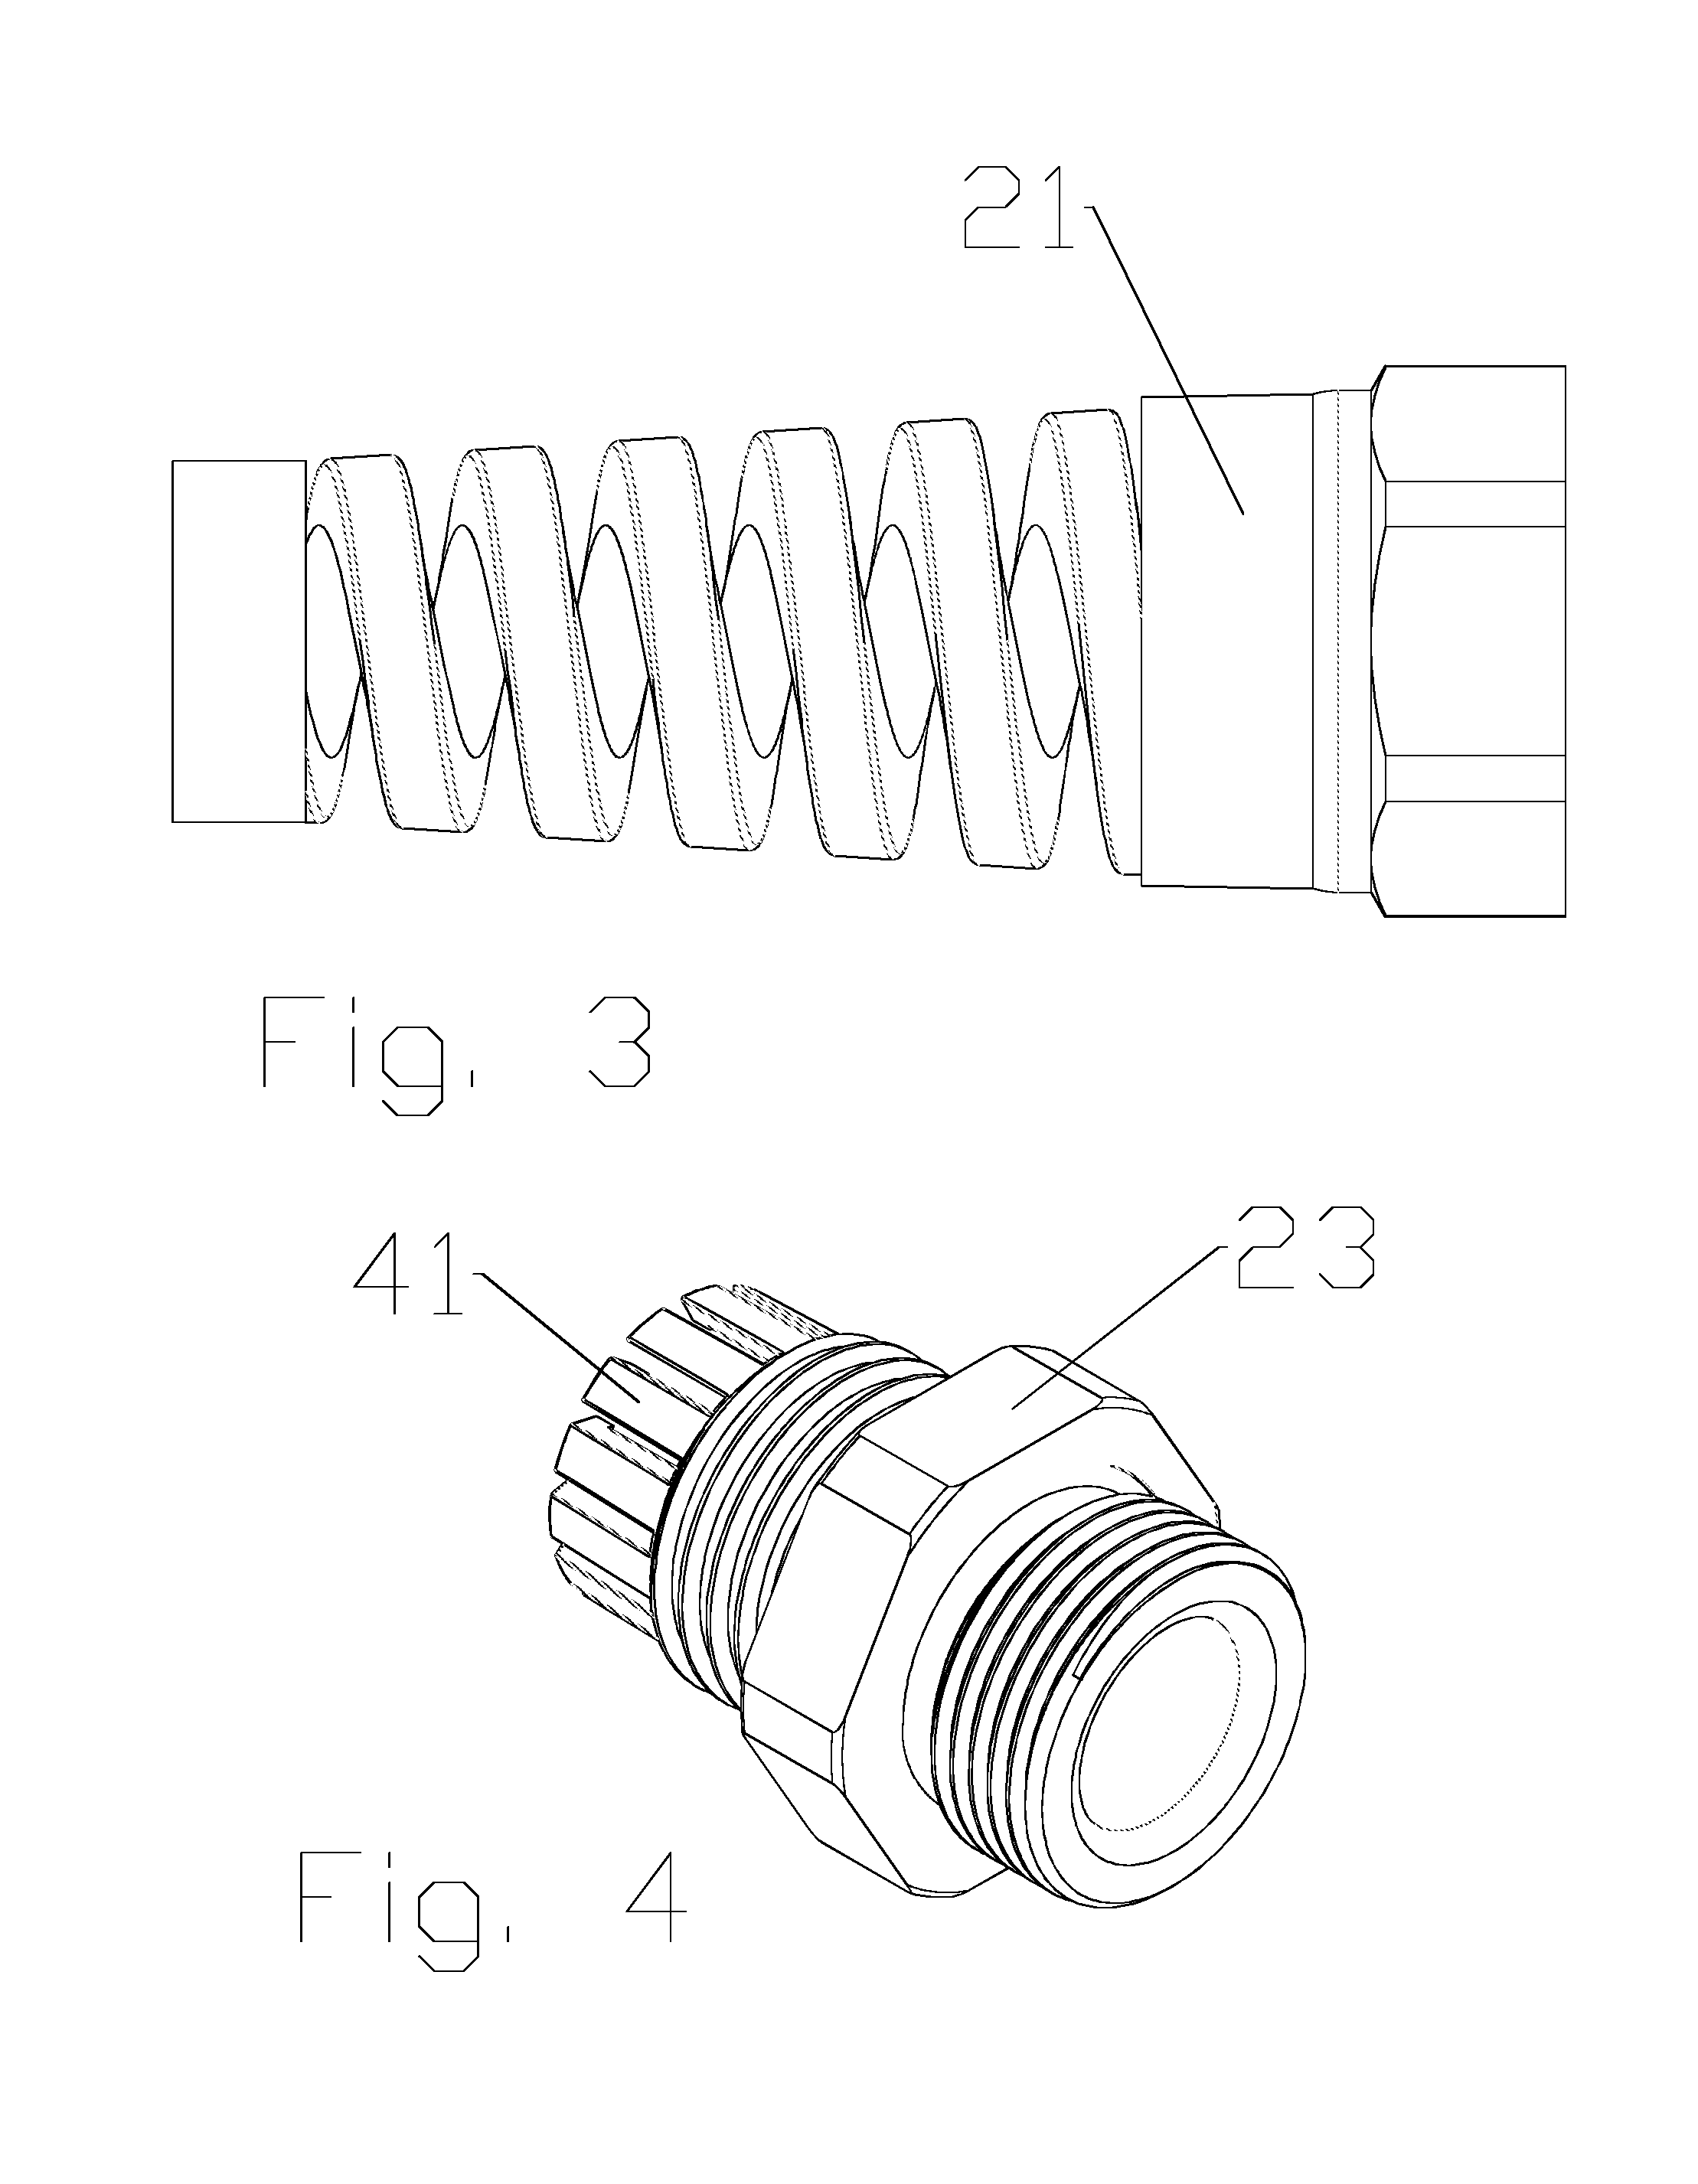 Robust optical crimp connector